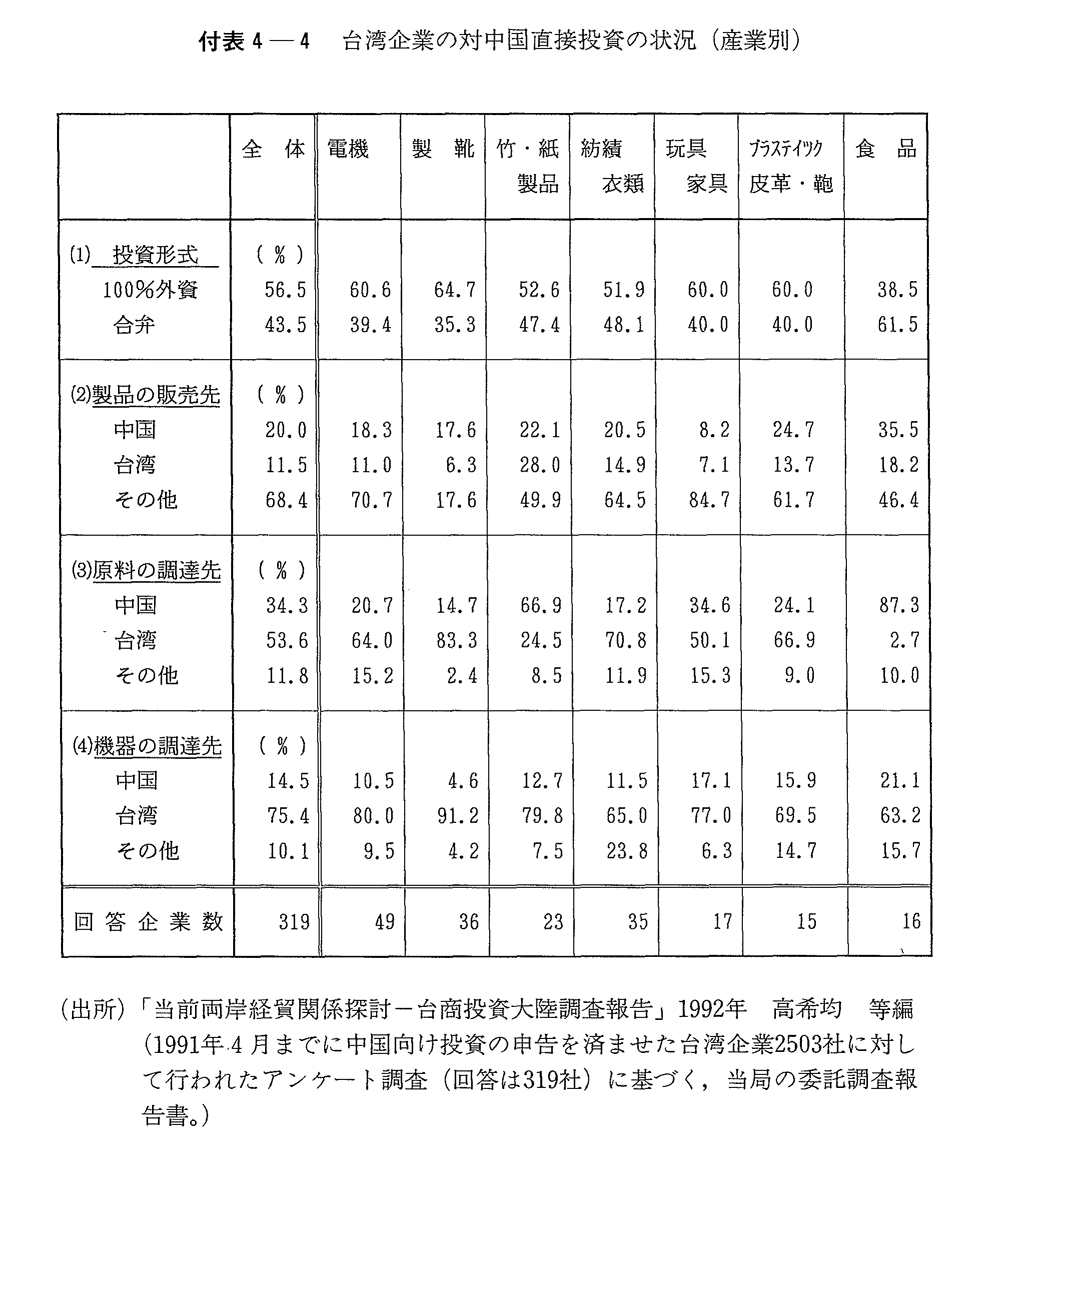 付表4-4　台湾企業の対中国直接投資の状況